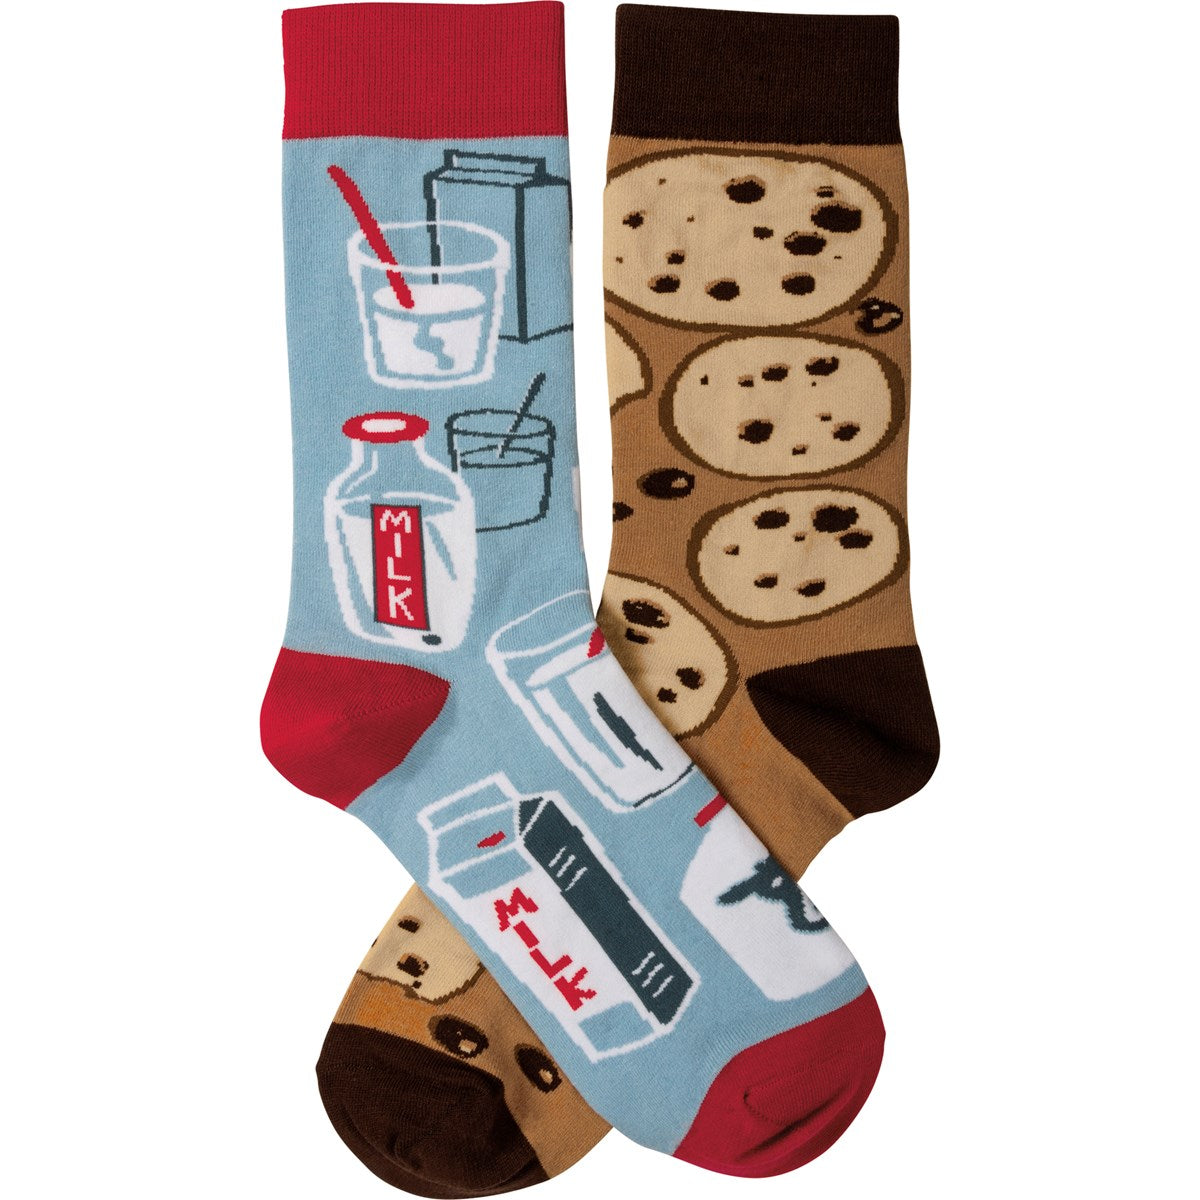 Milk & Cookies Socks